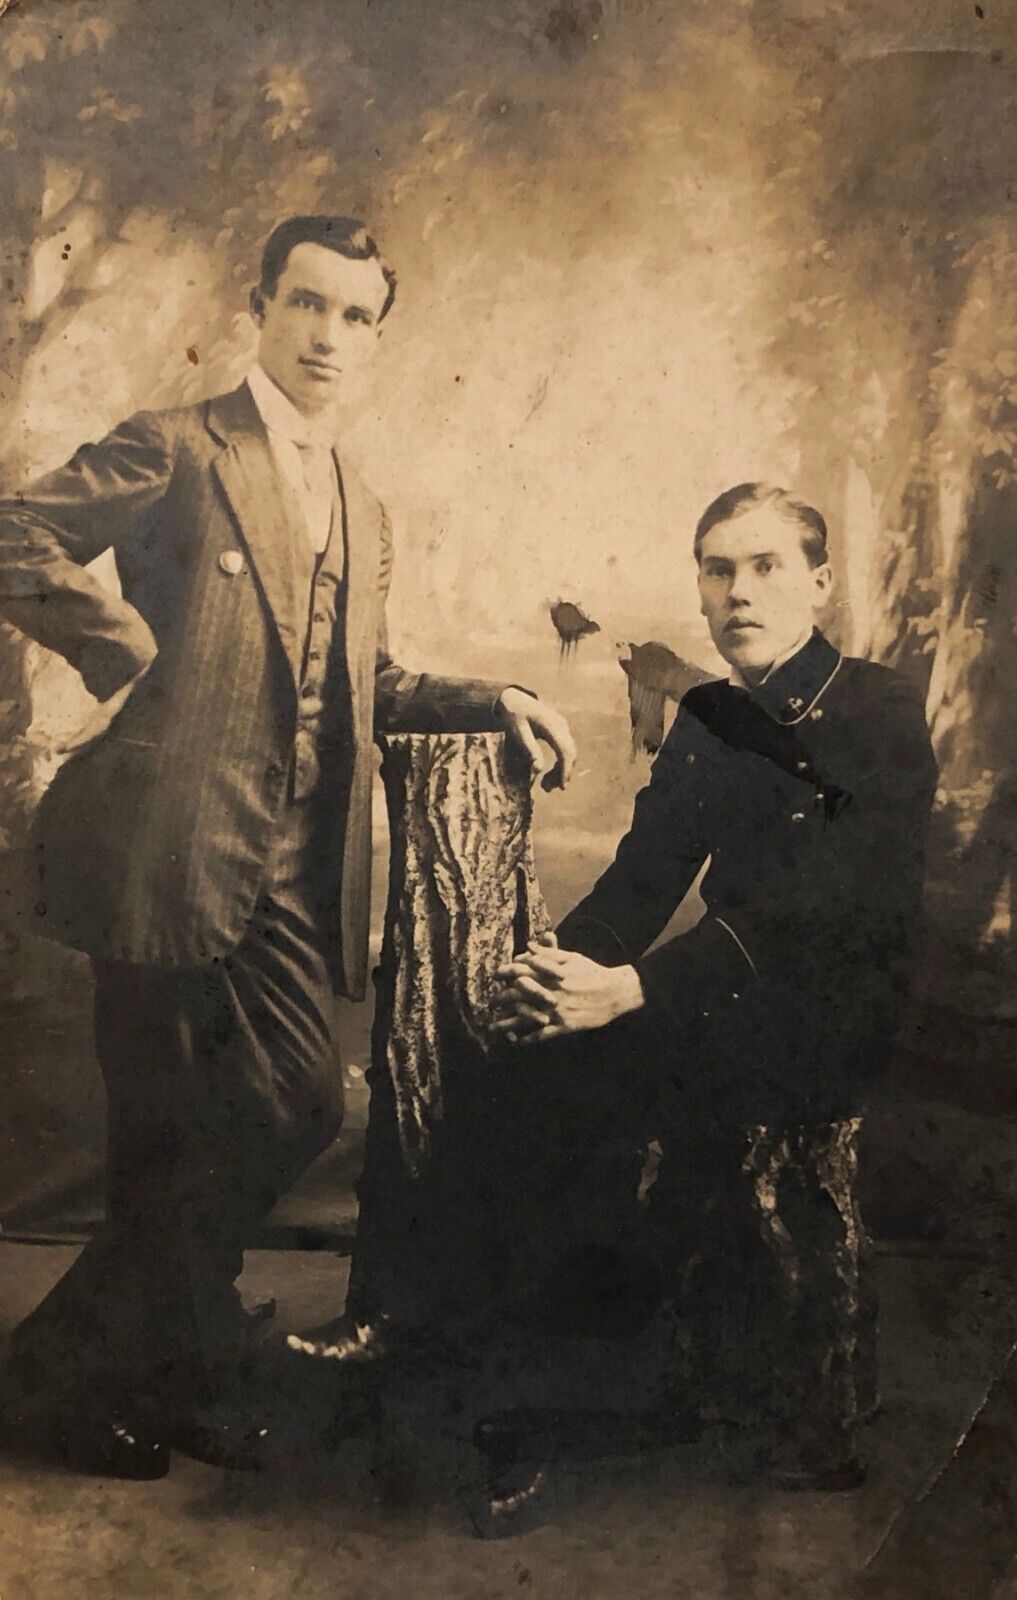 1916 Vintage photo Authentic Tsarist era photo Two Friends Guys B&W Portrait